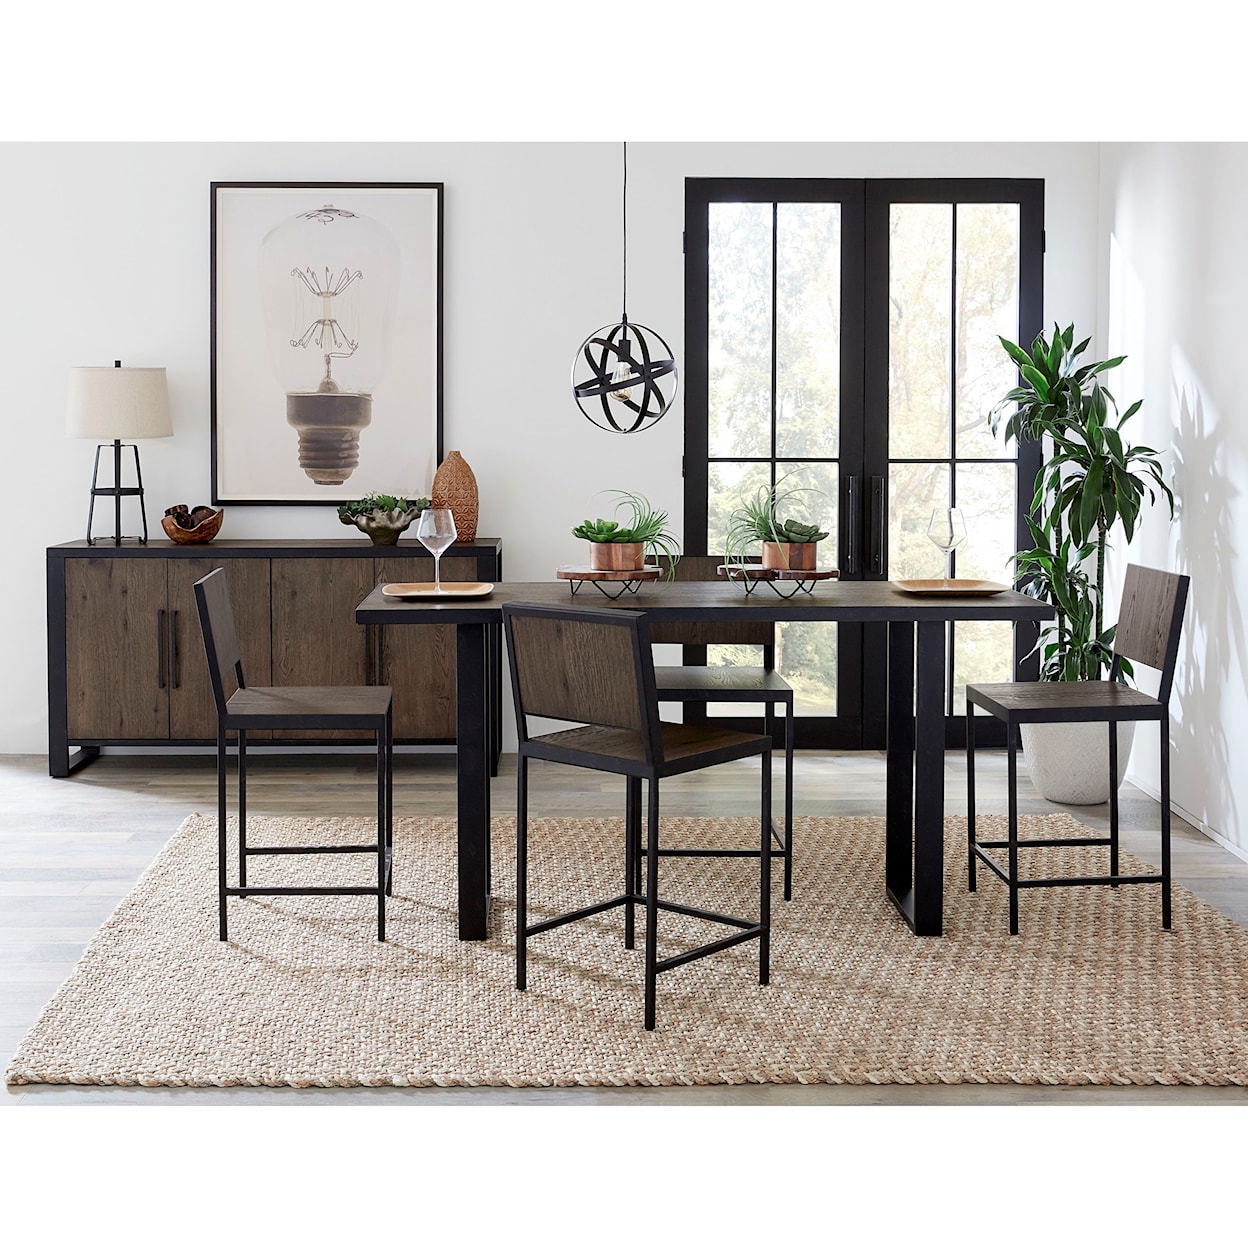 Modus International Hudson Counter Table in Shadow Grey